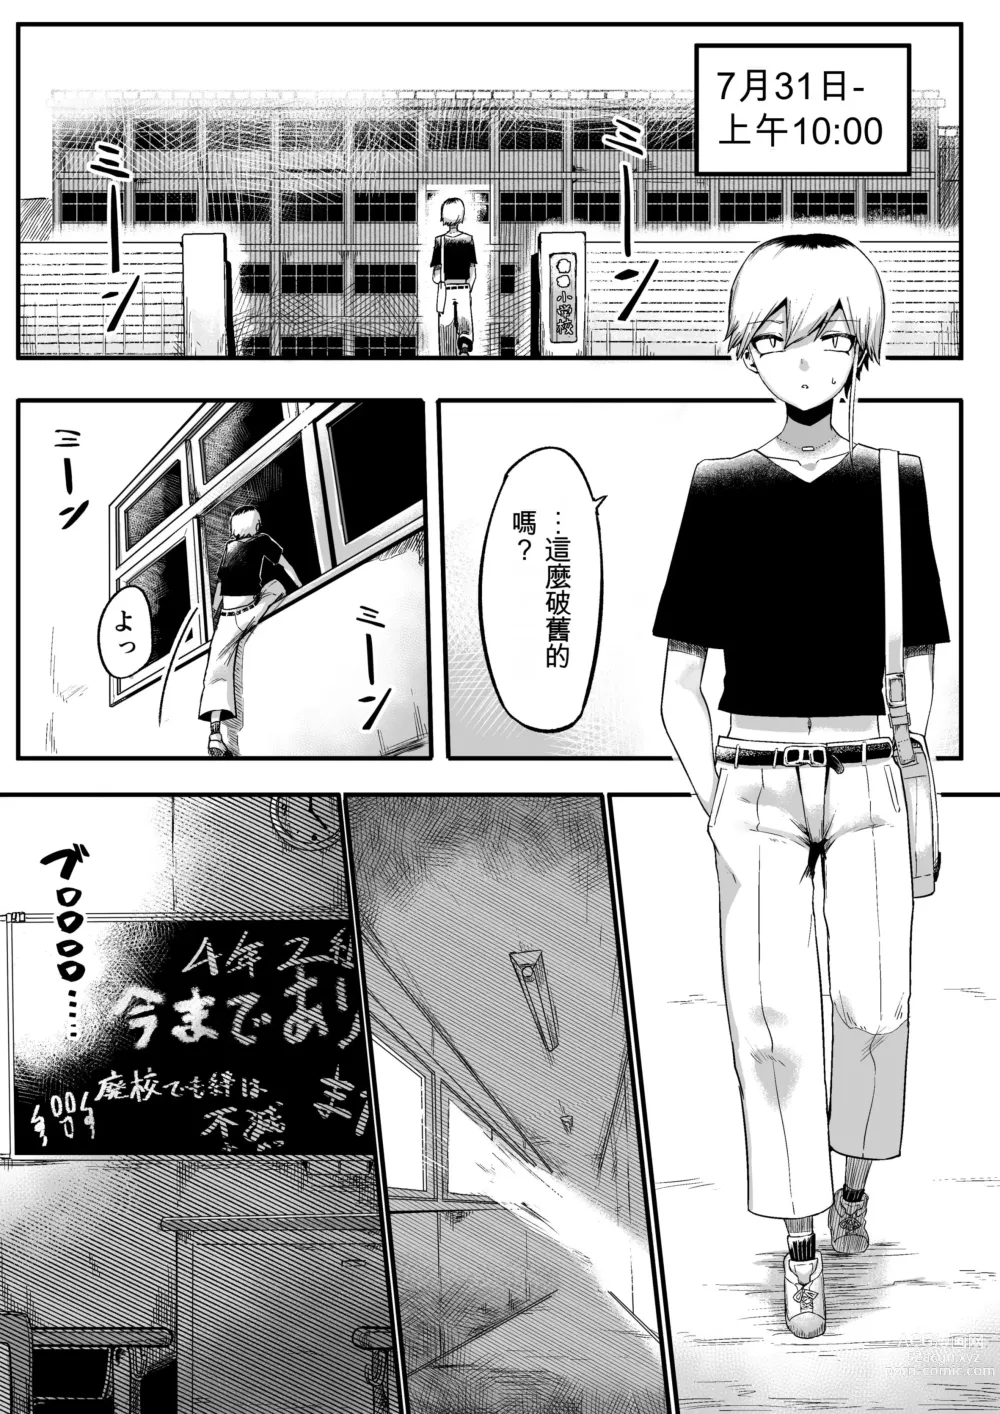 Page 7 of doujinshi Toile no Hanabirako-san